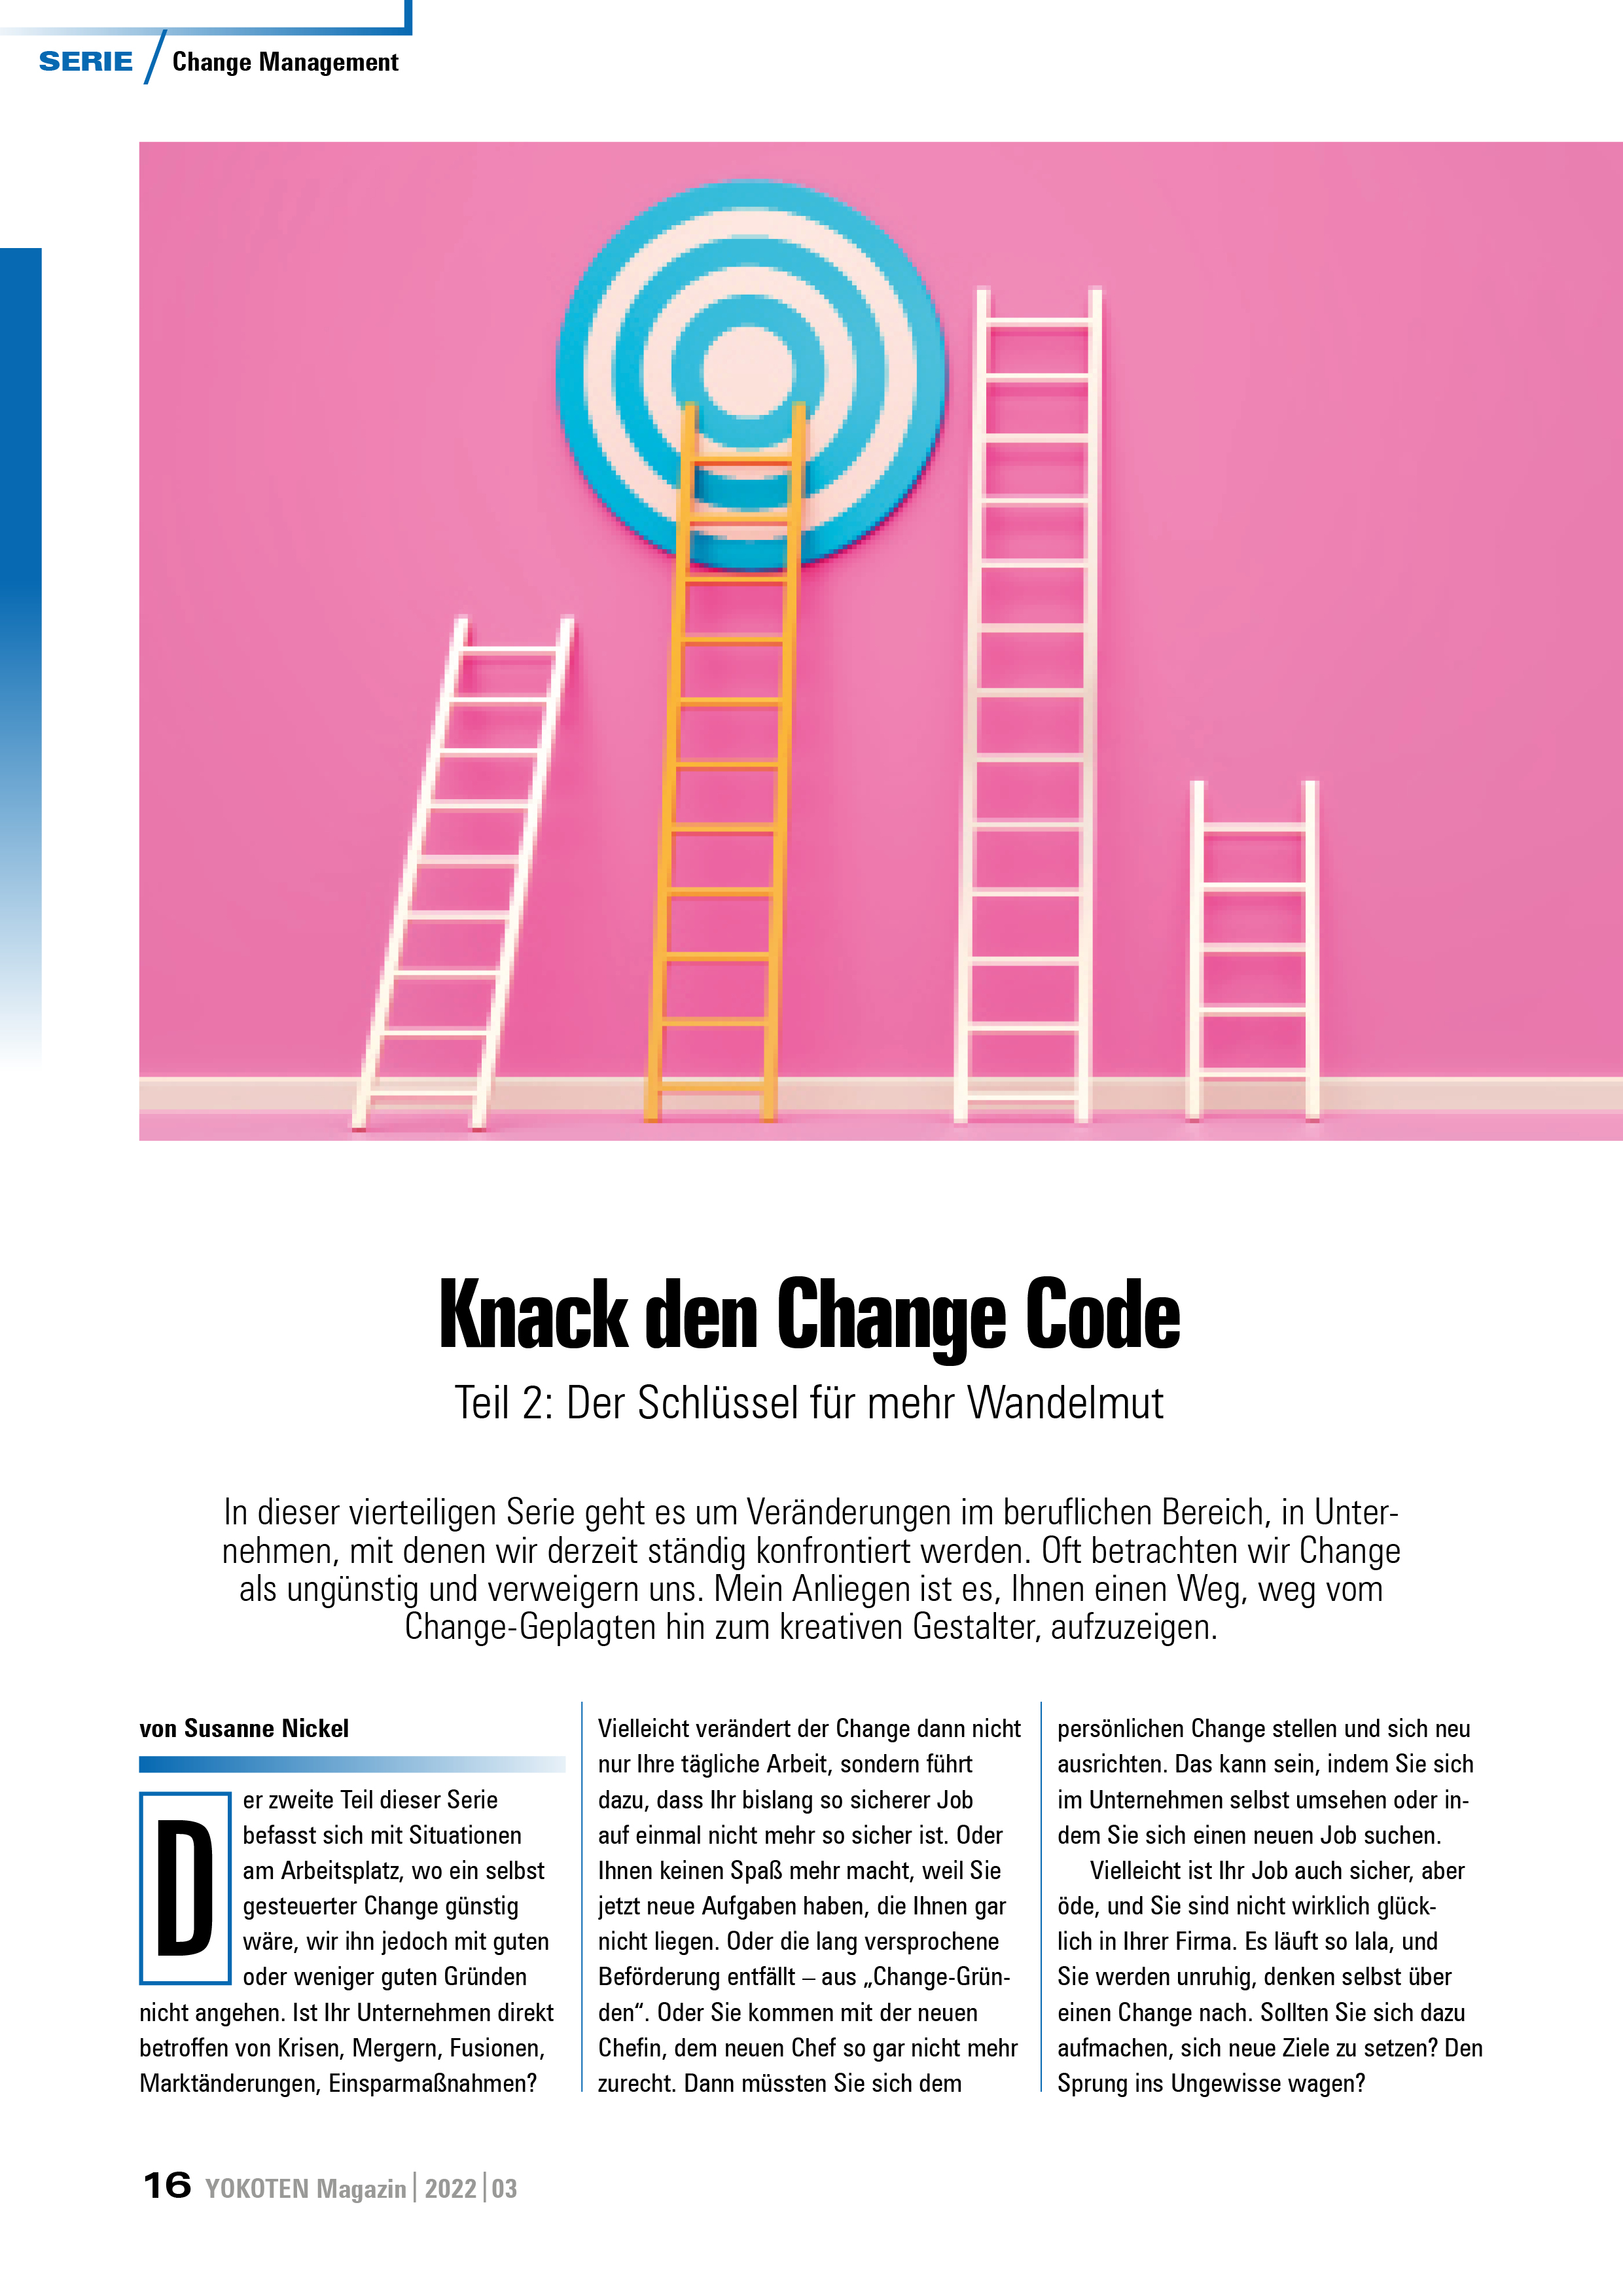 Knack den Change Code - Artikel aus Fachmagazin YOKOTEN 2022-03